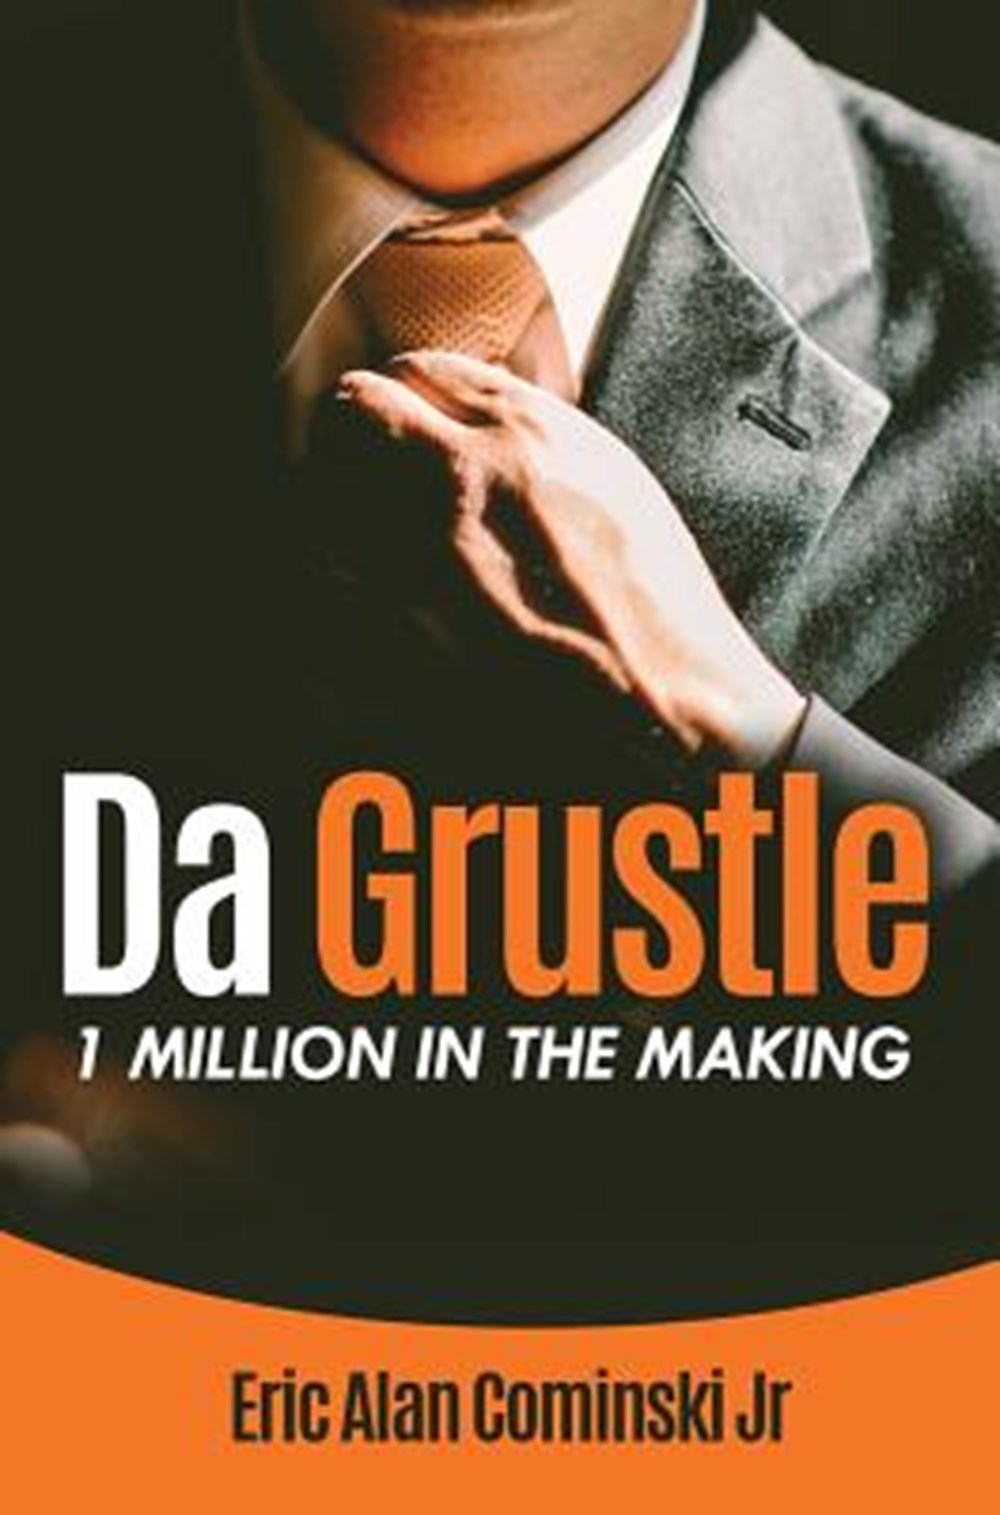 Da Grustle 1 Million in The Making